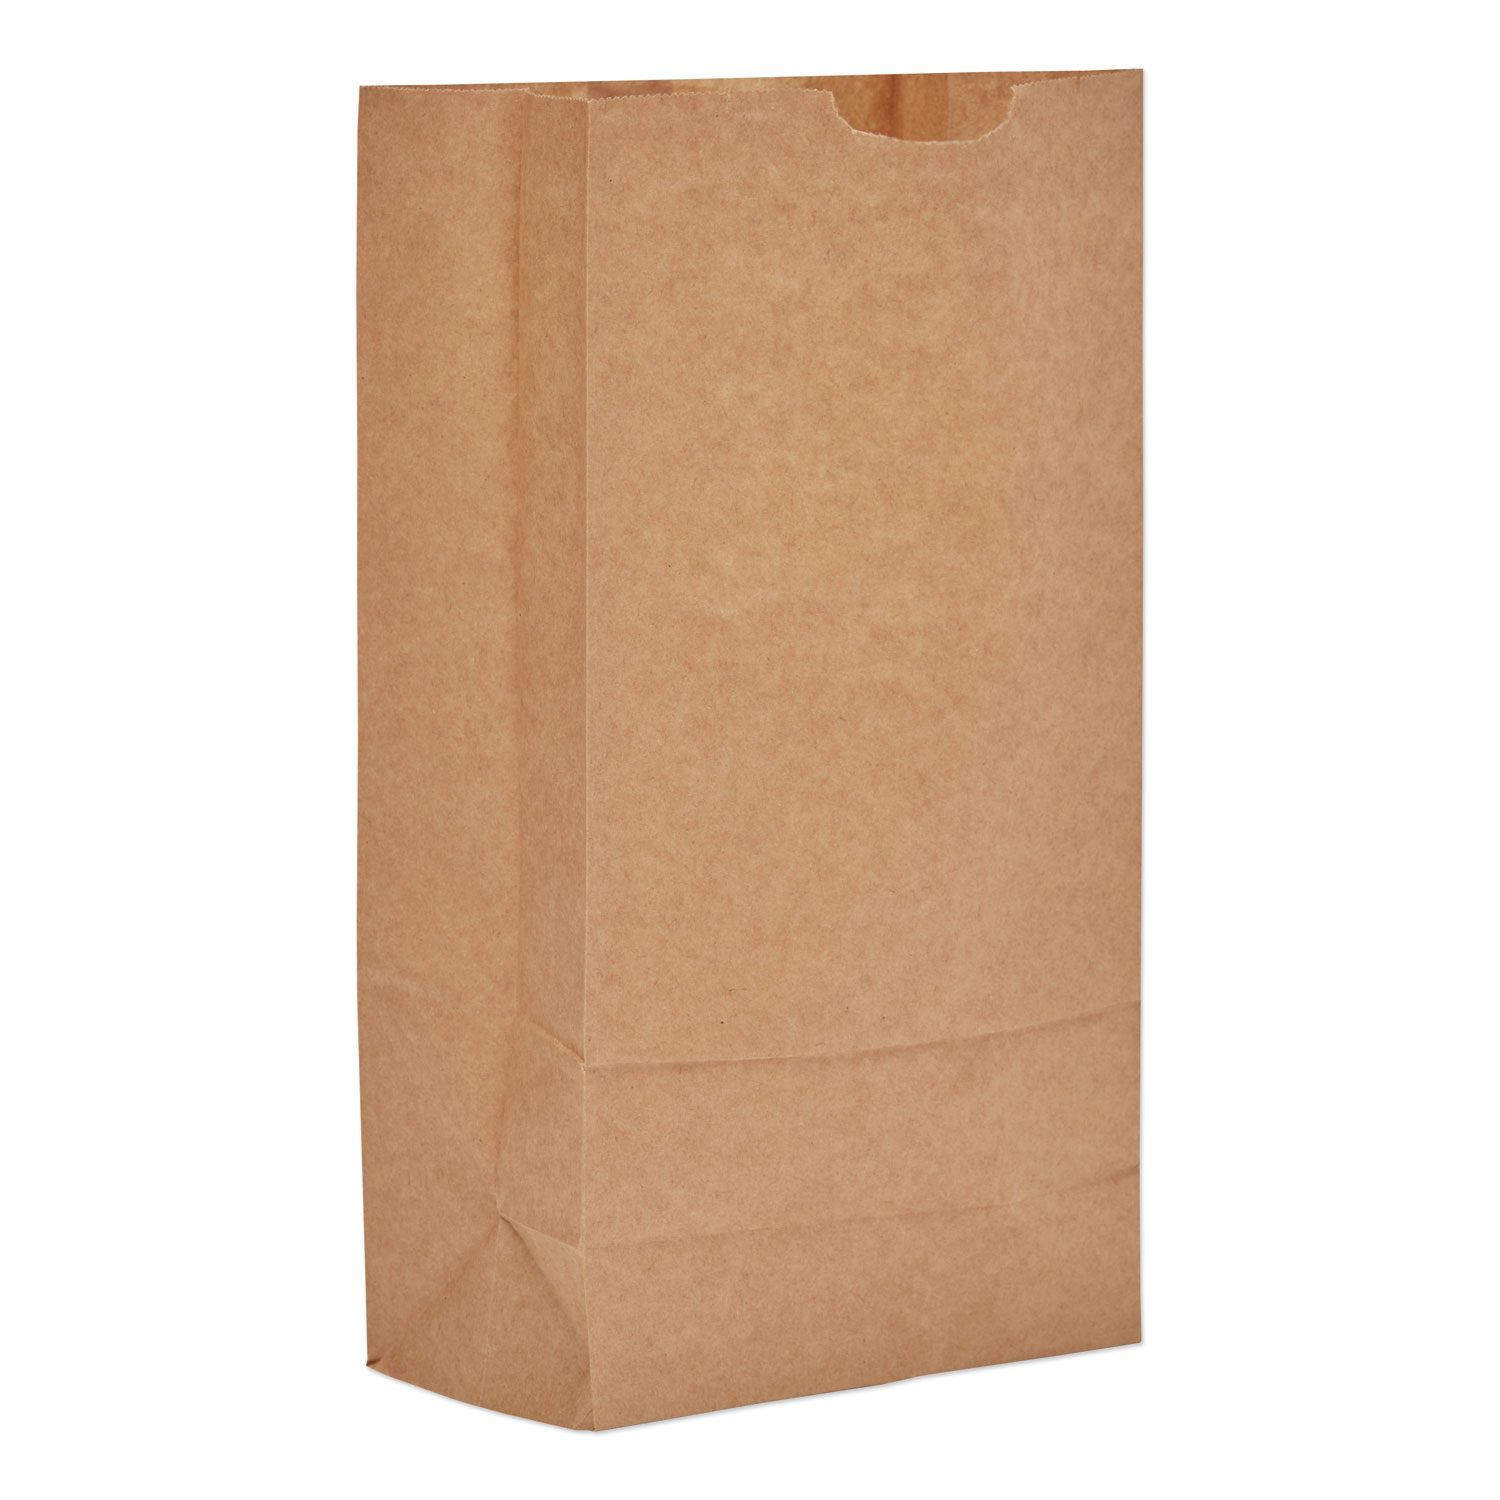  General 18410 Grocery Paper Bags, 35 lbs Capacity, #10, 6.31w x 4.19d x 13.38h, Kraft, 500 Bags (BAGGK10500) 